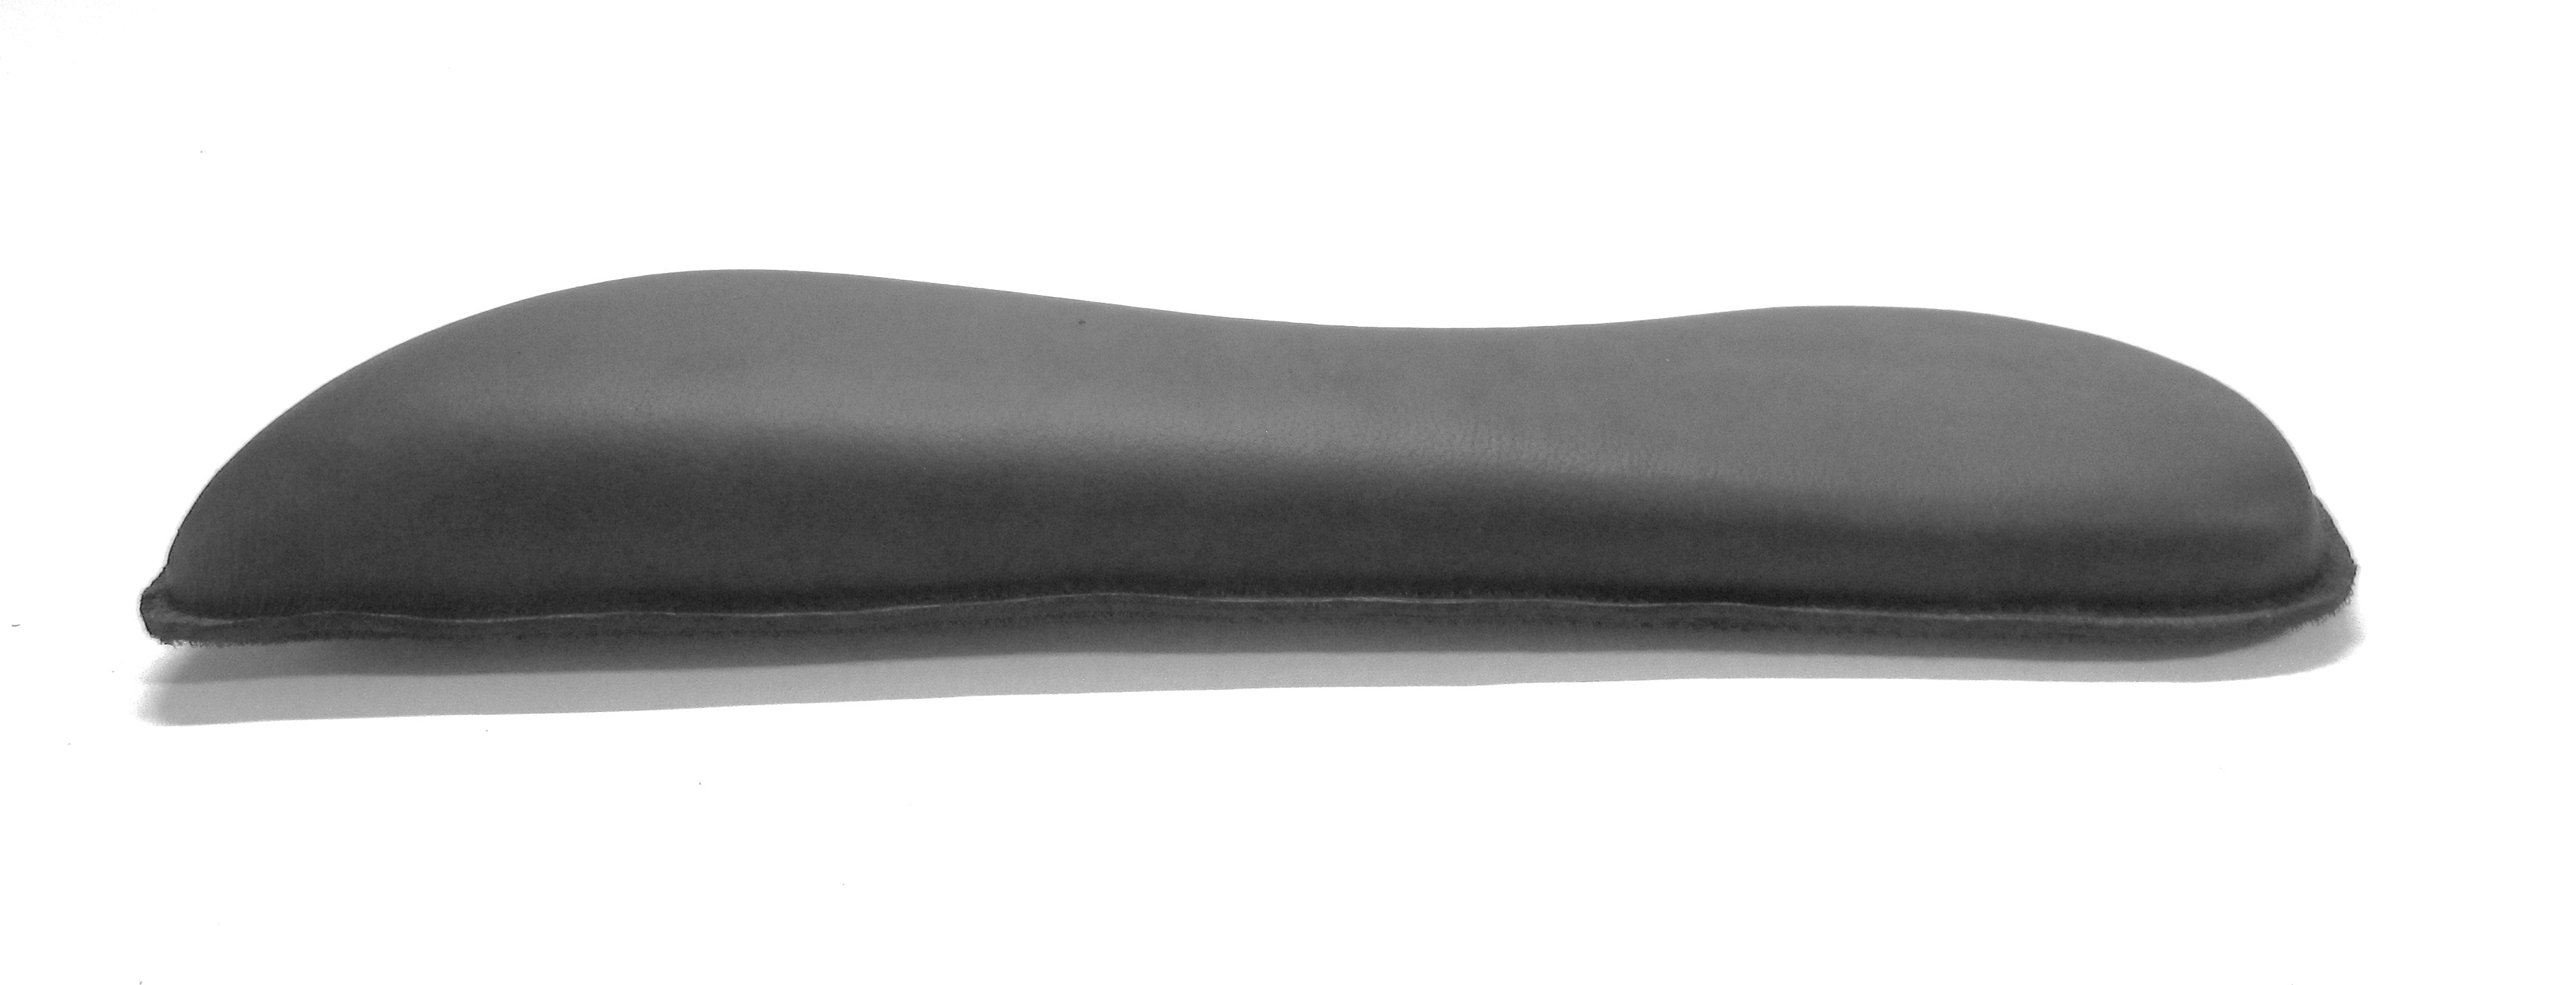 3-4-5 cm Keilform Klettkissen Standard Form;  - Einzelpaar - Sattelkissen/Klett-Panels